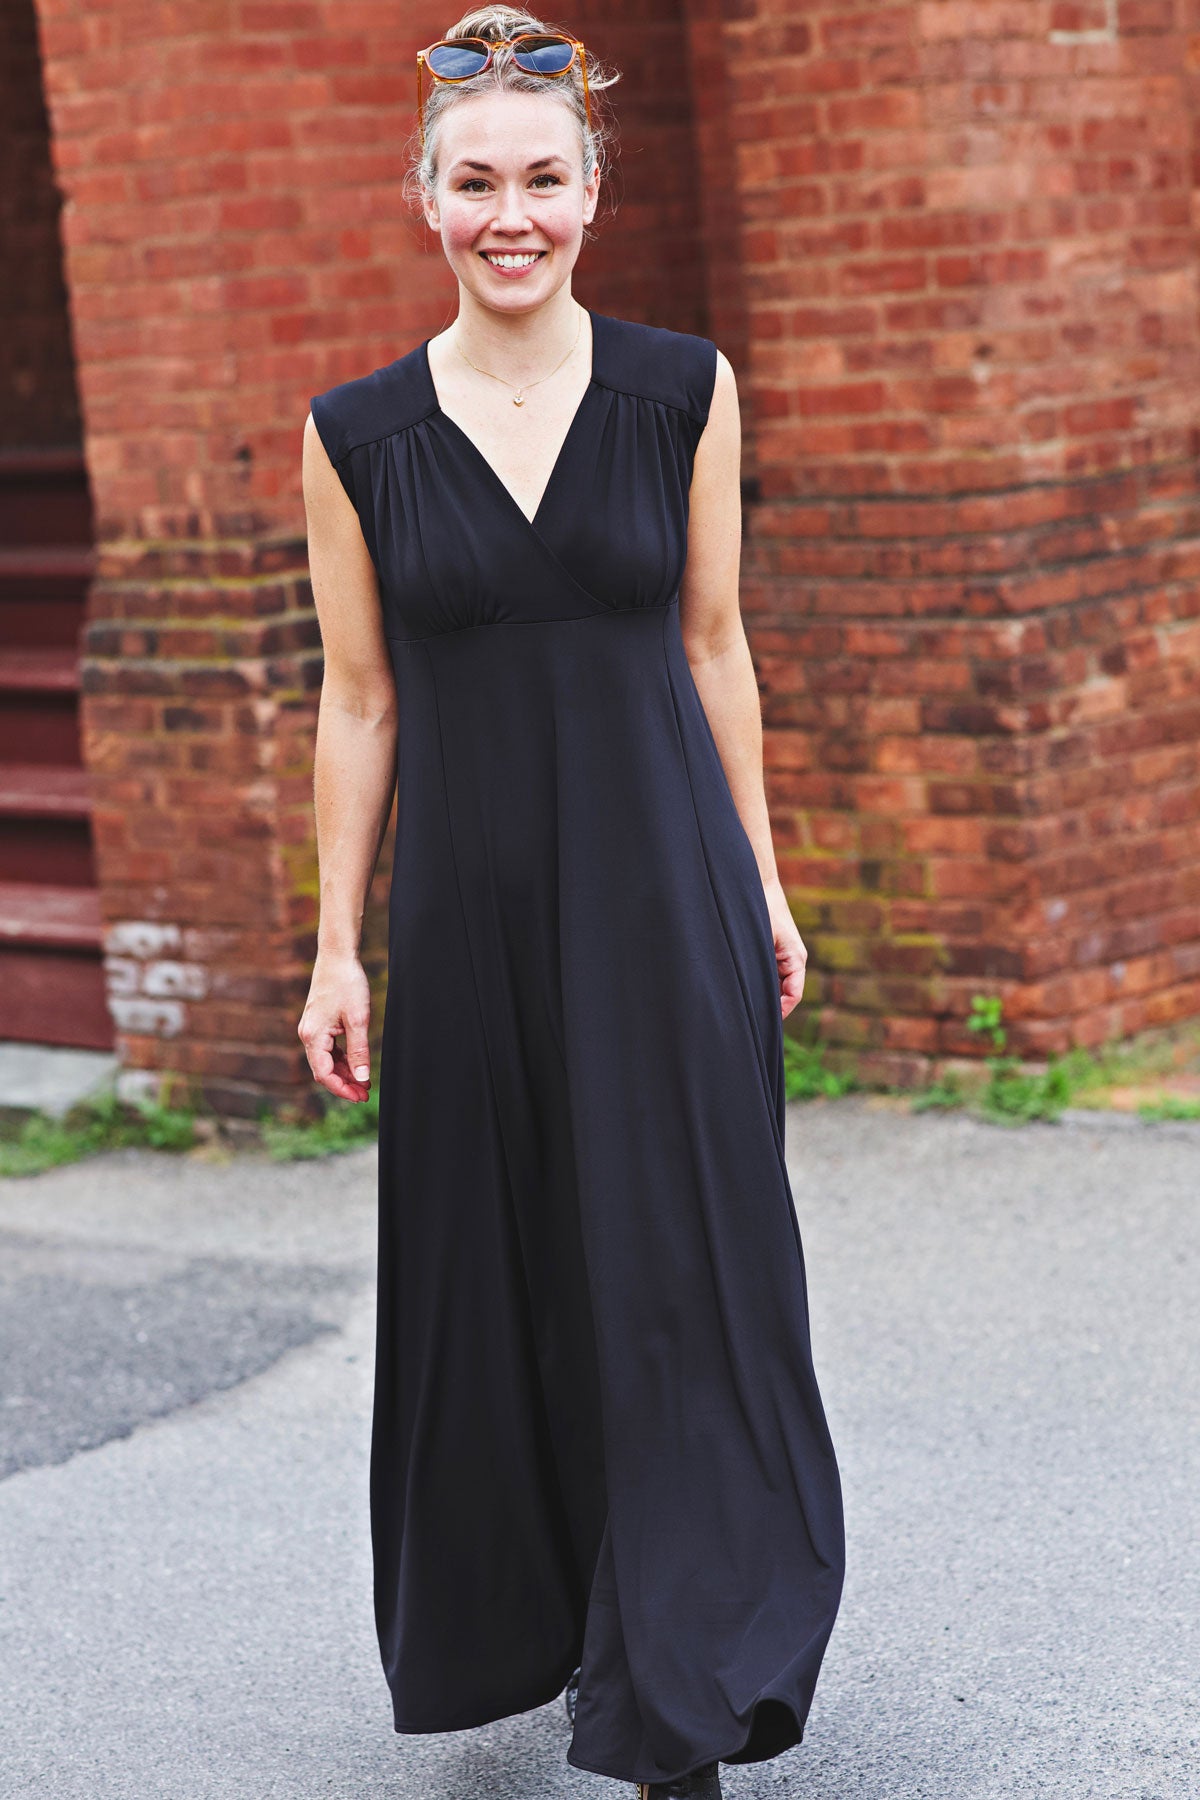 Nadine Dress in Black by Karina Dresses